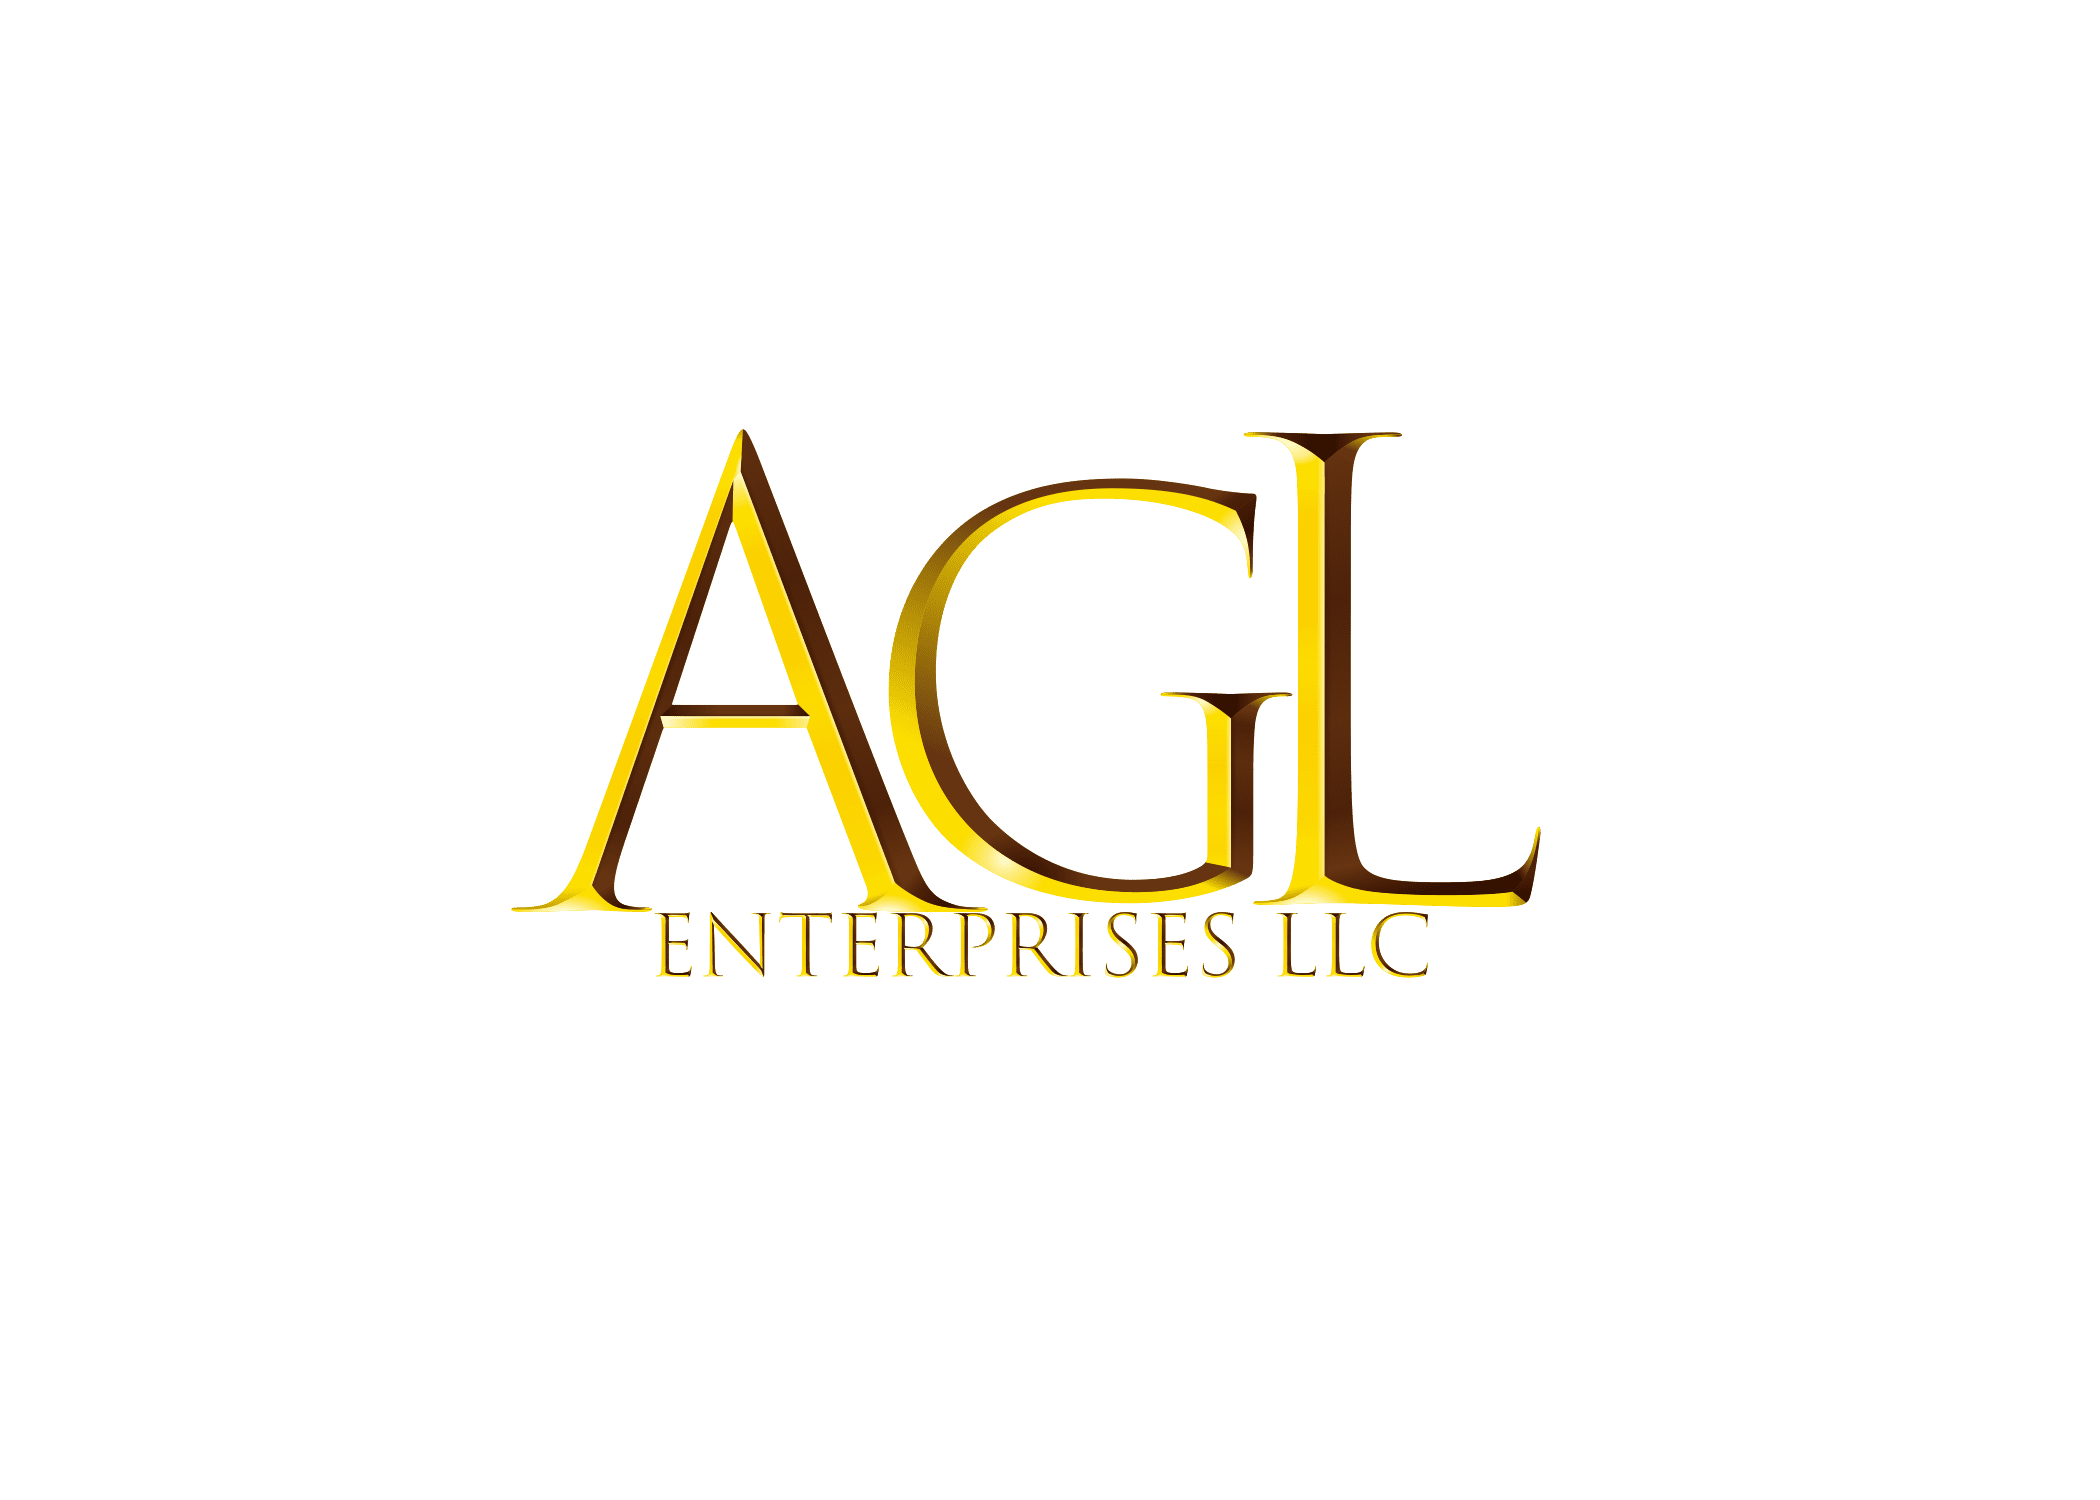 agl logo for business